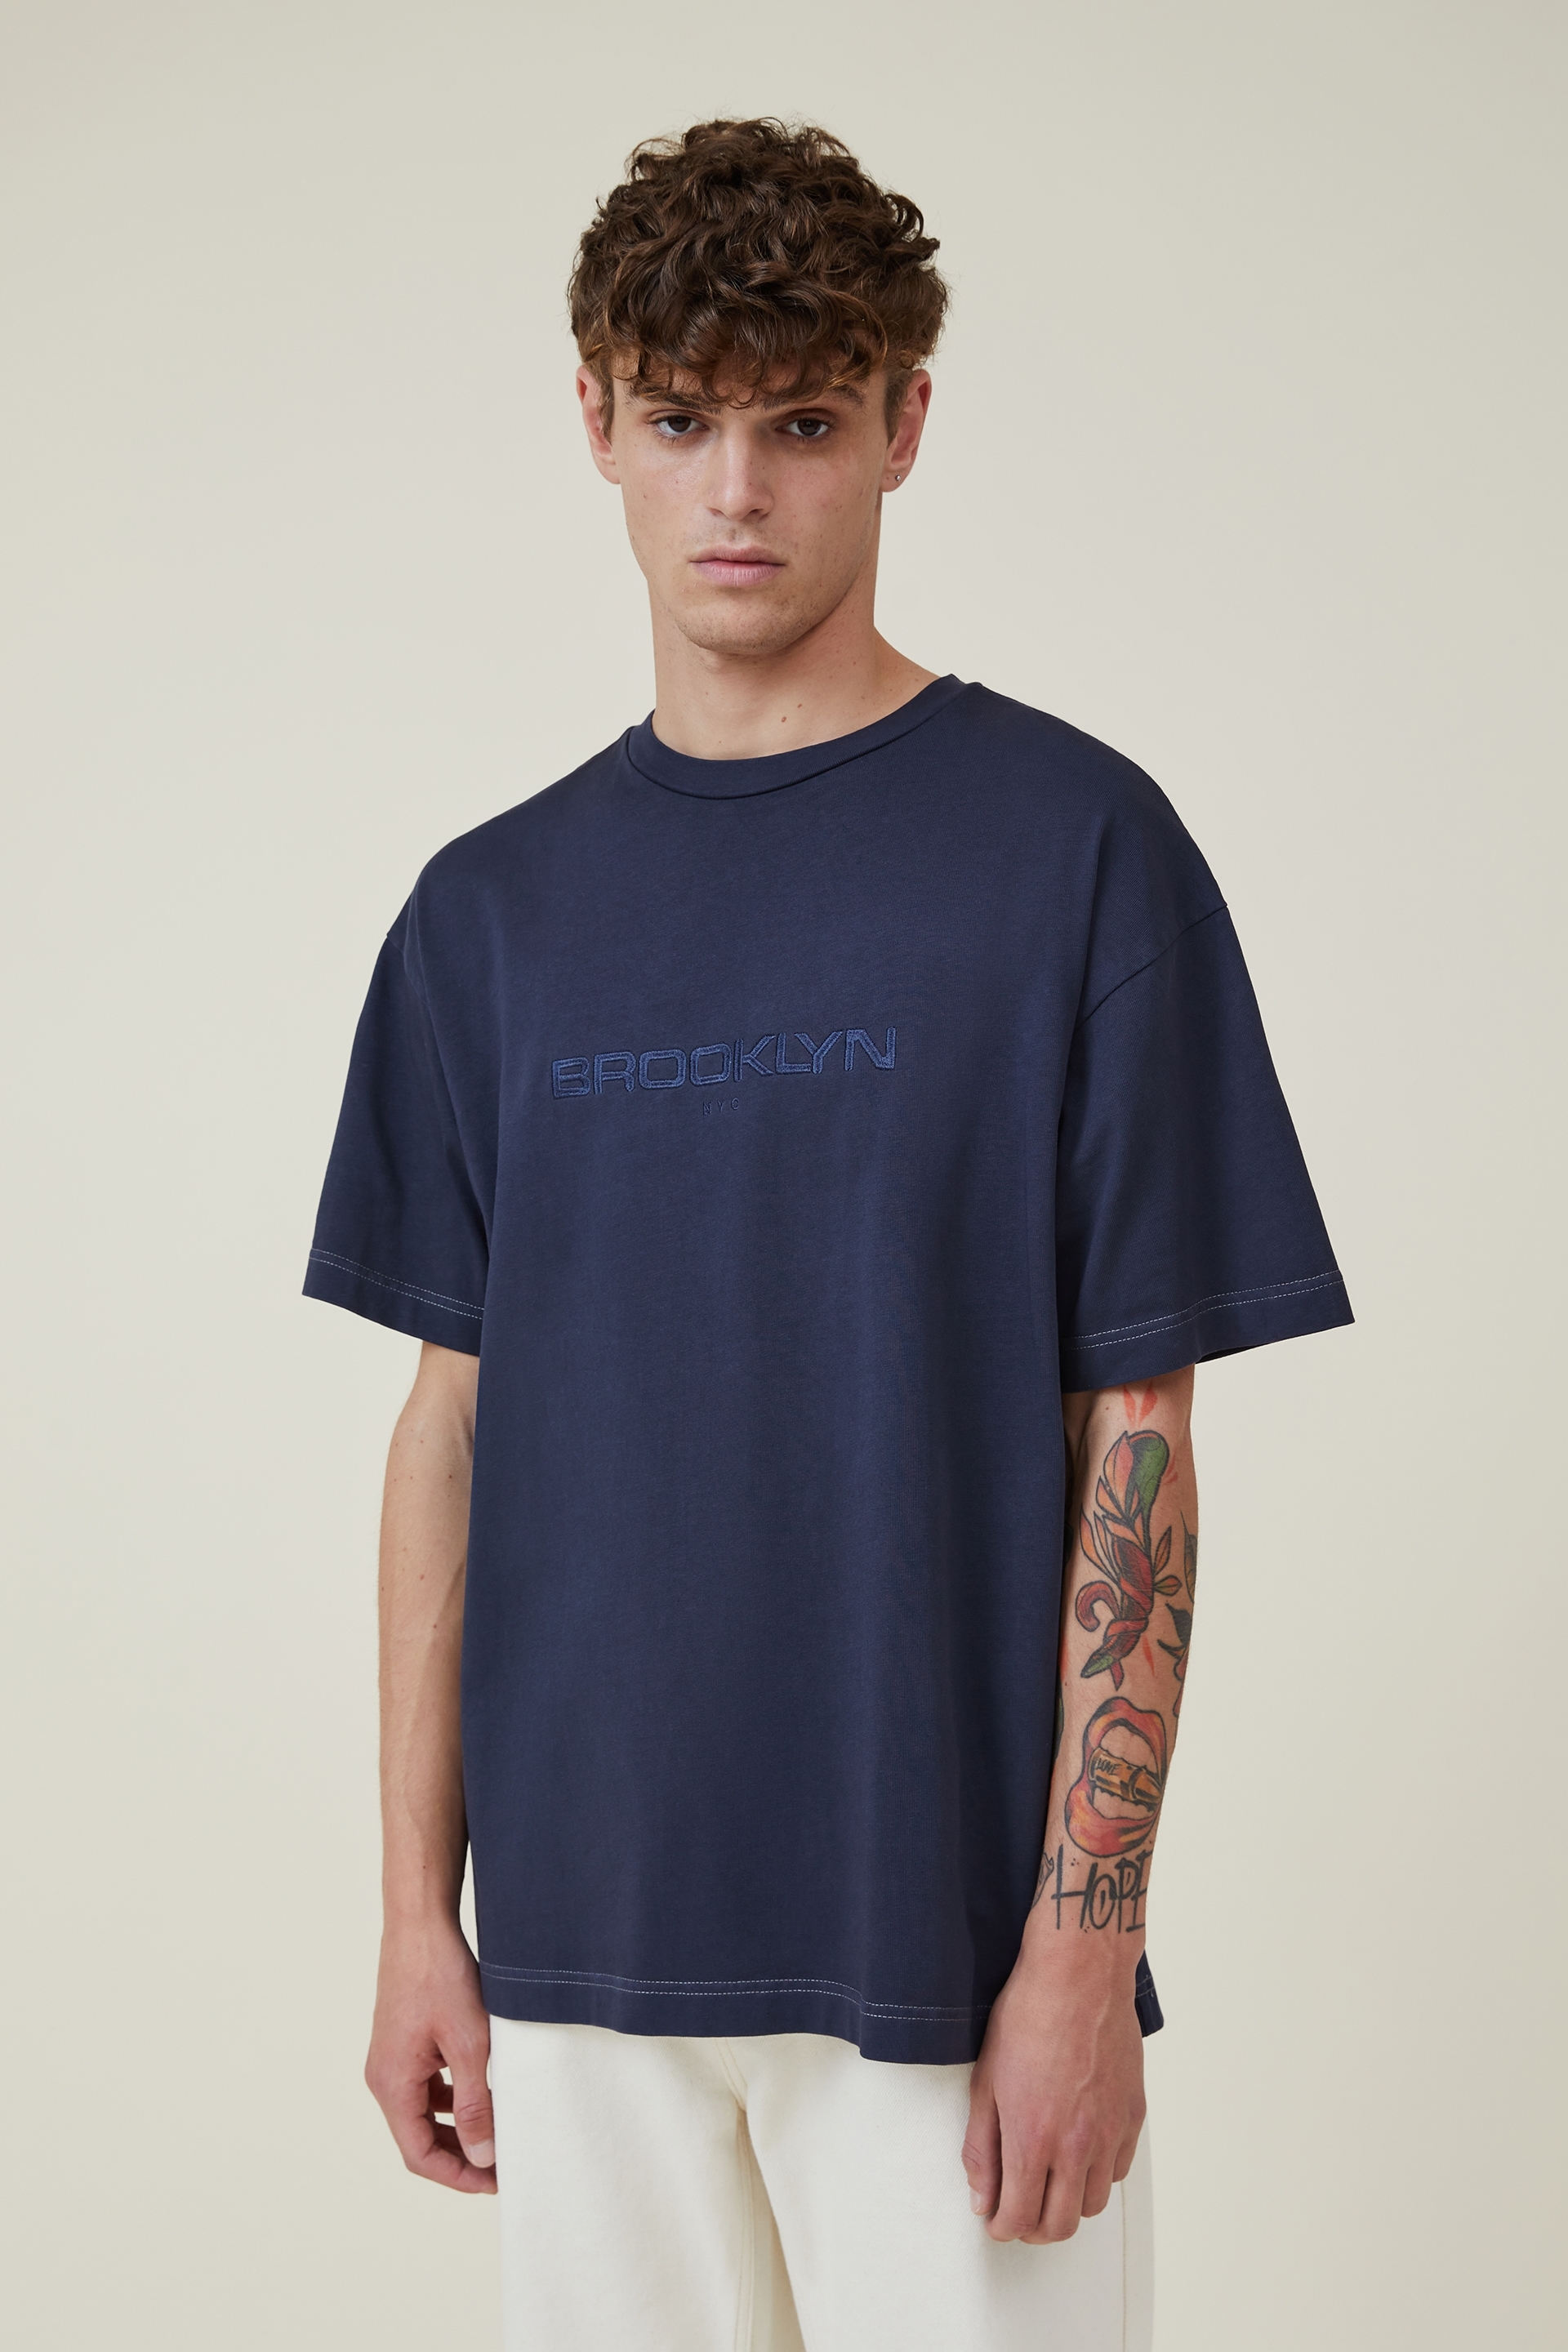 Cotton On Men - Box Fit Plain T-Shirt - True navy/brooklyn nyc